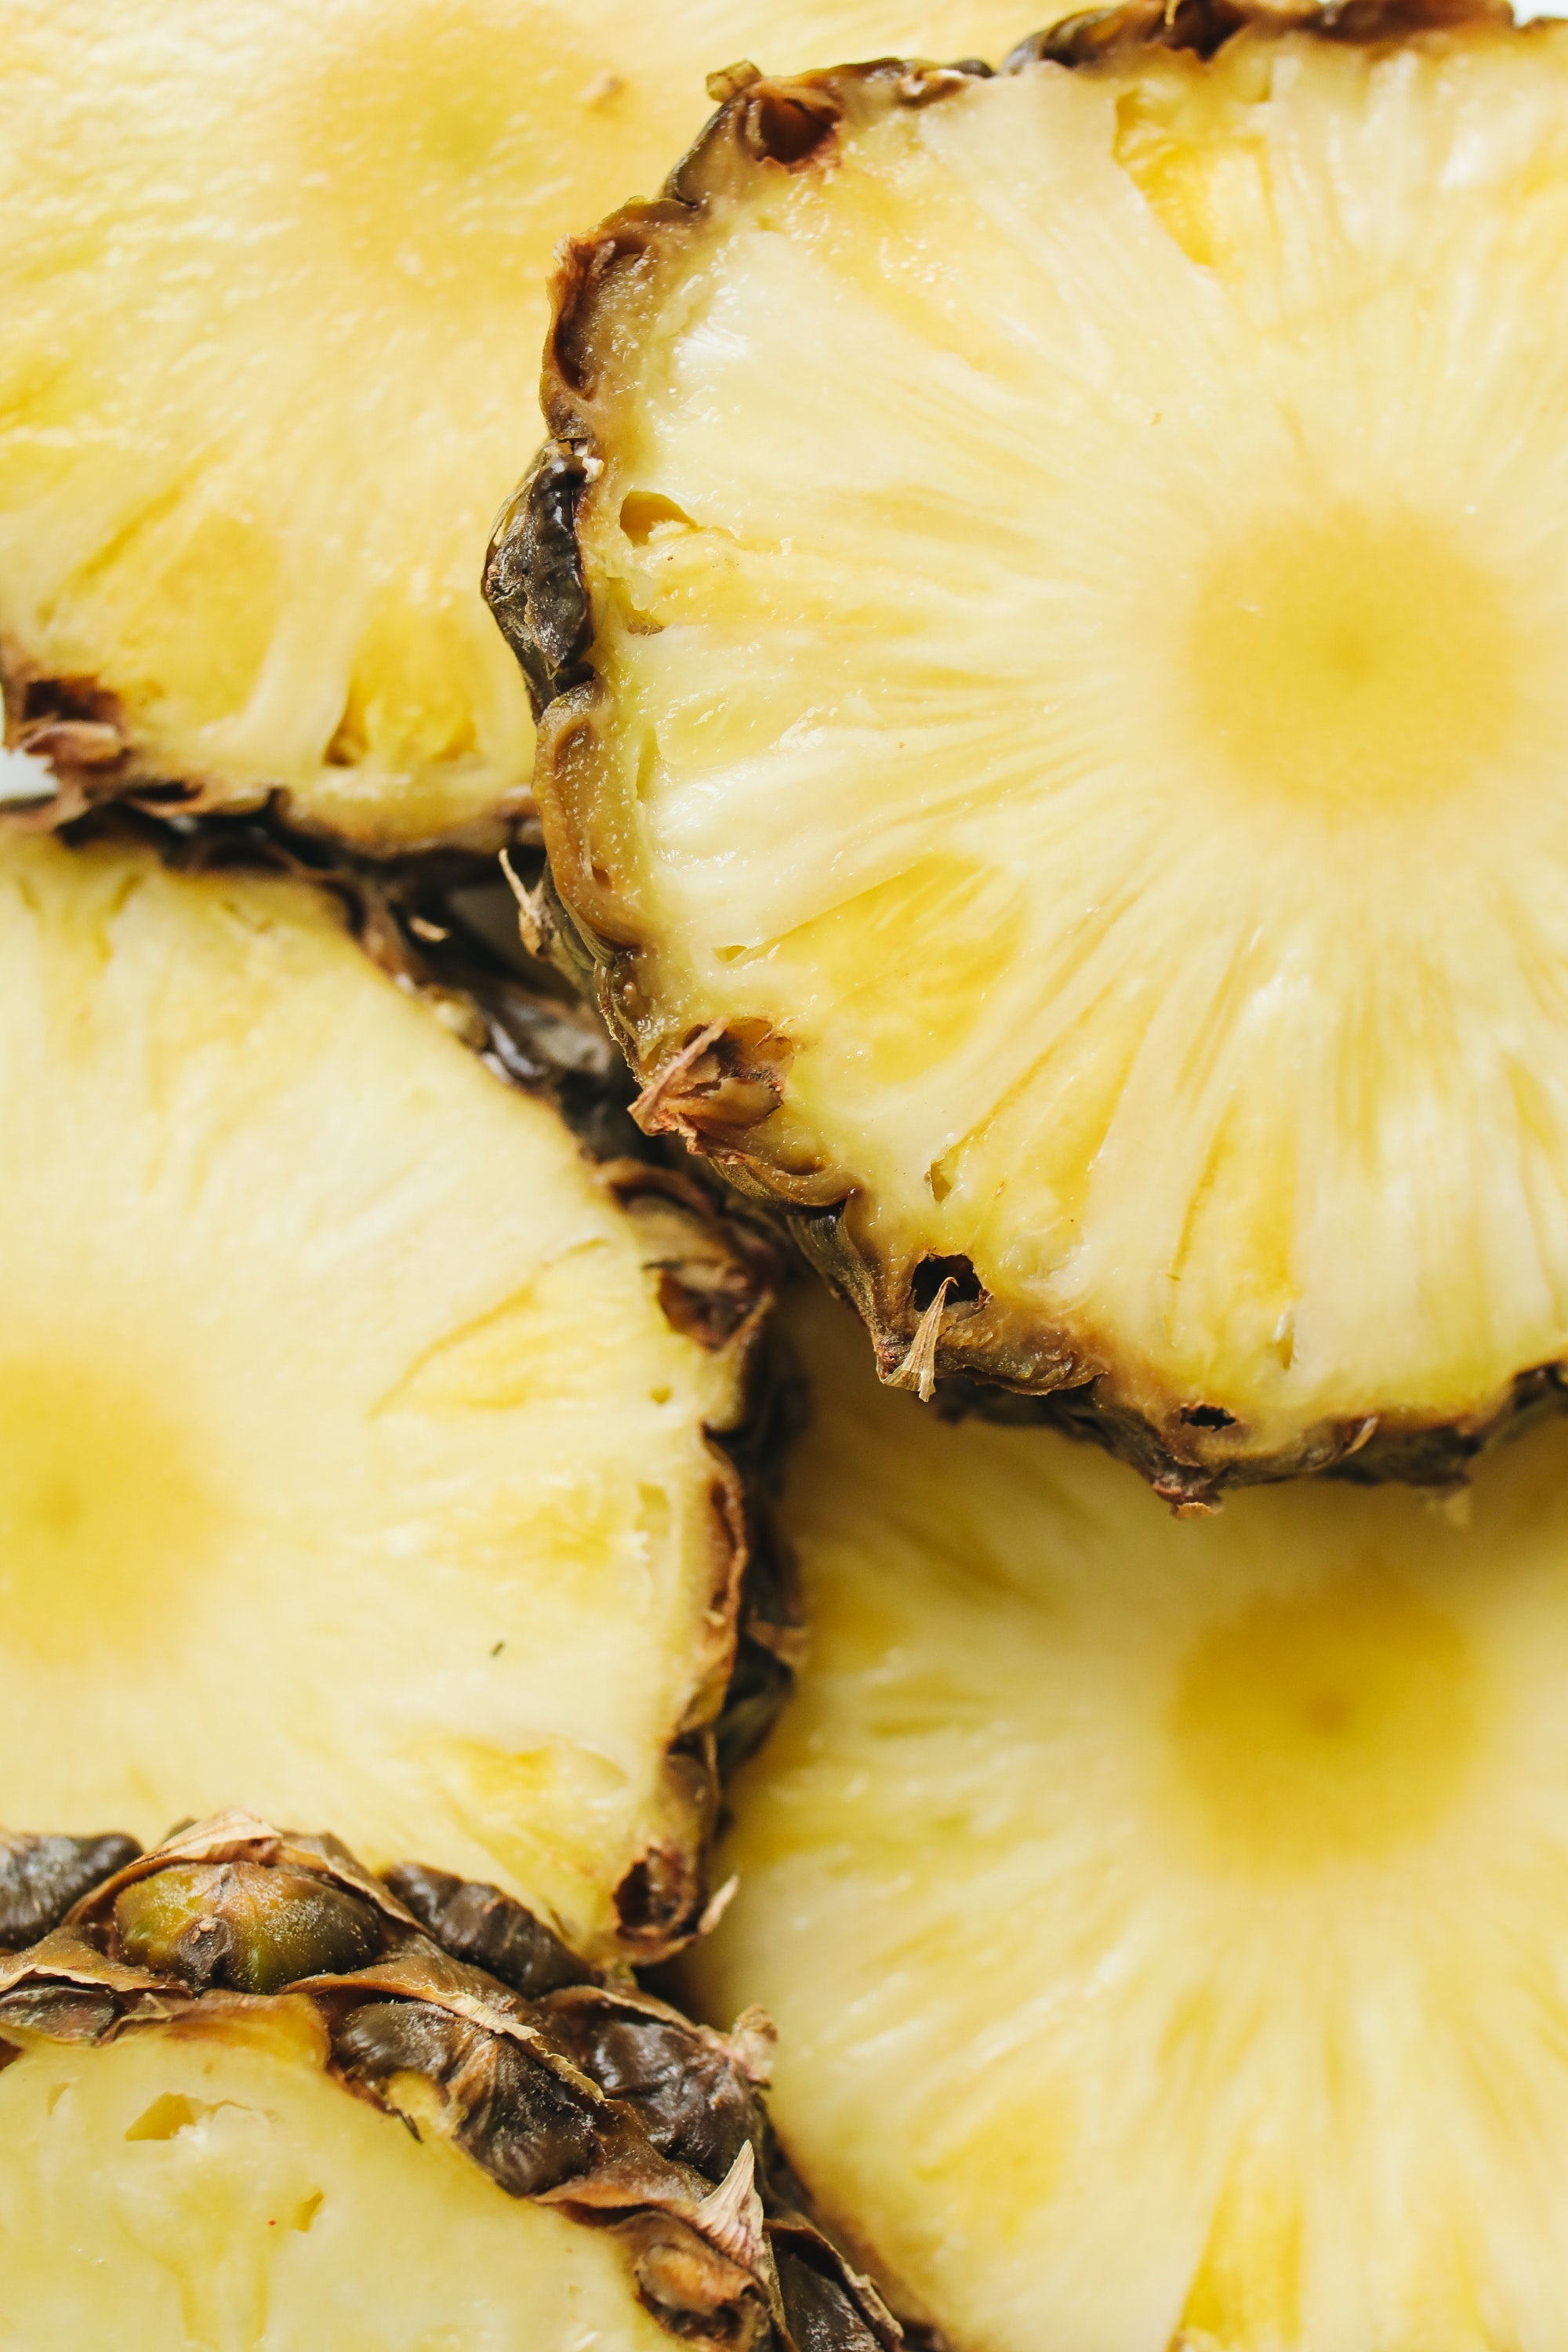 Pineapple - Bromelain Enzyme Benefits